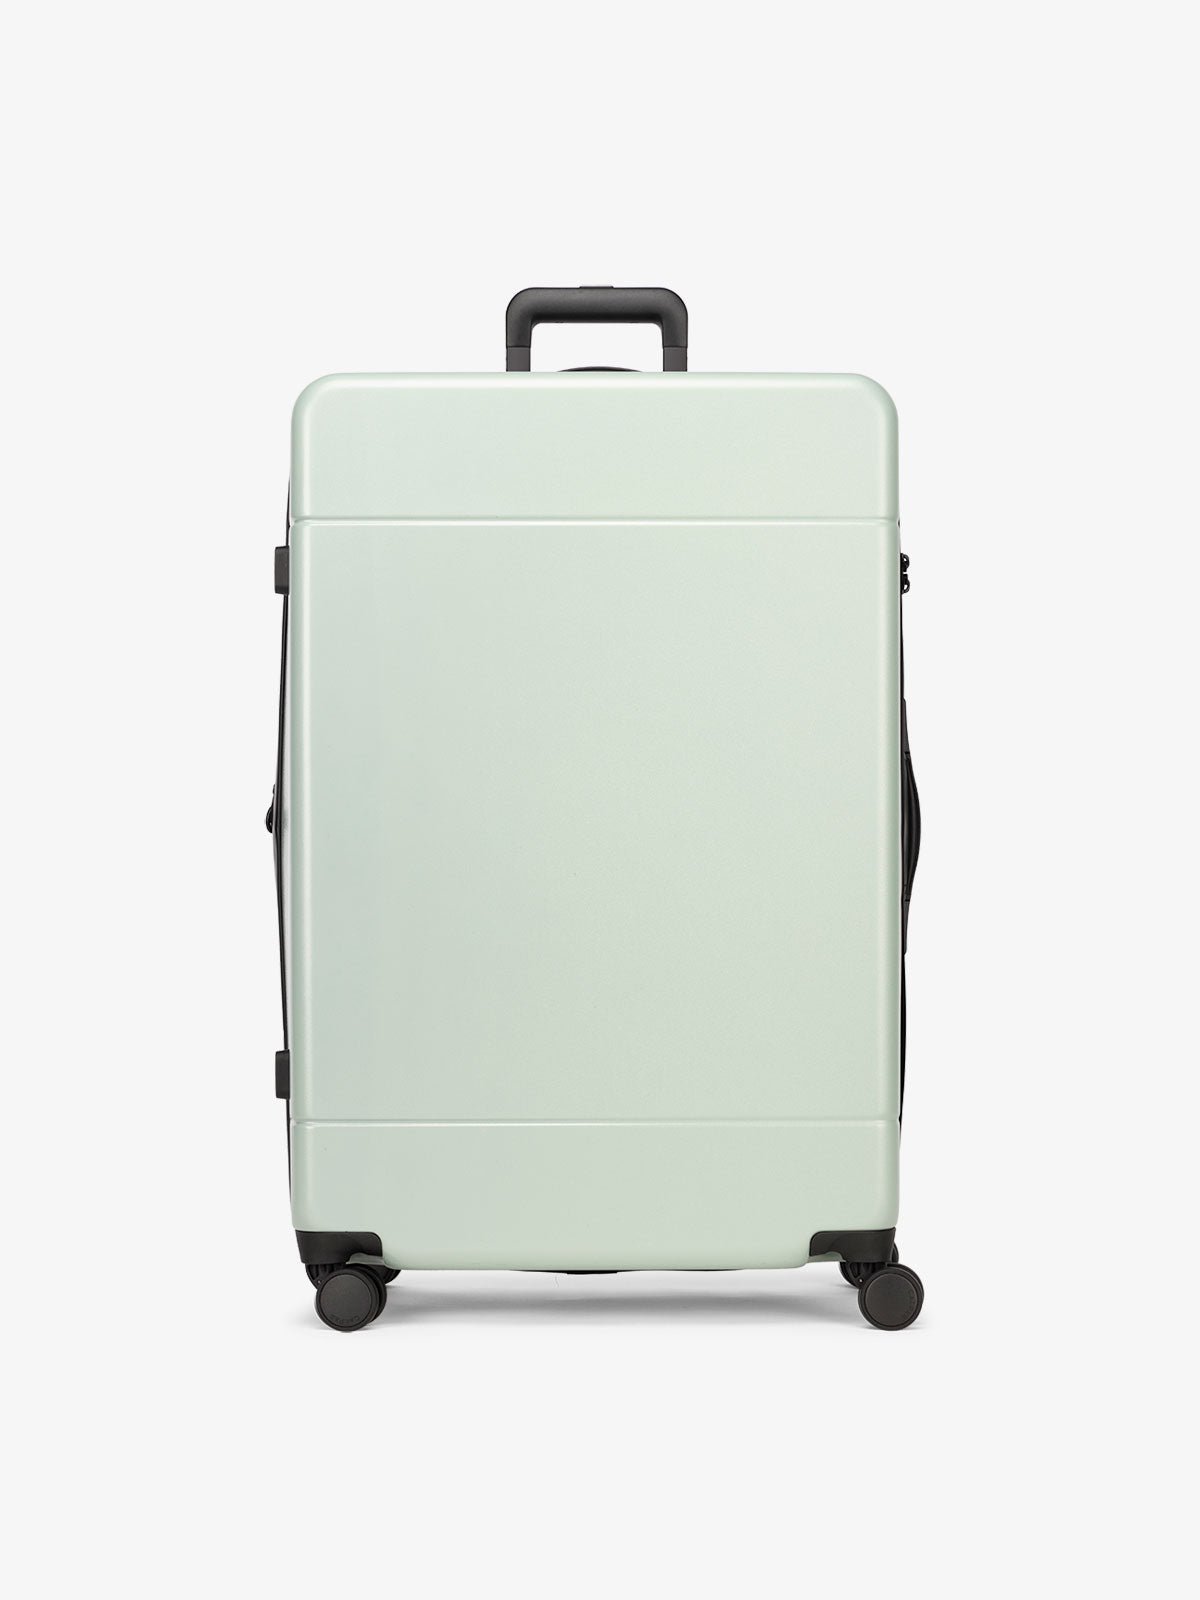 CALPAK Hue large luggage in light green jade